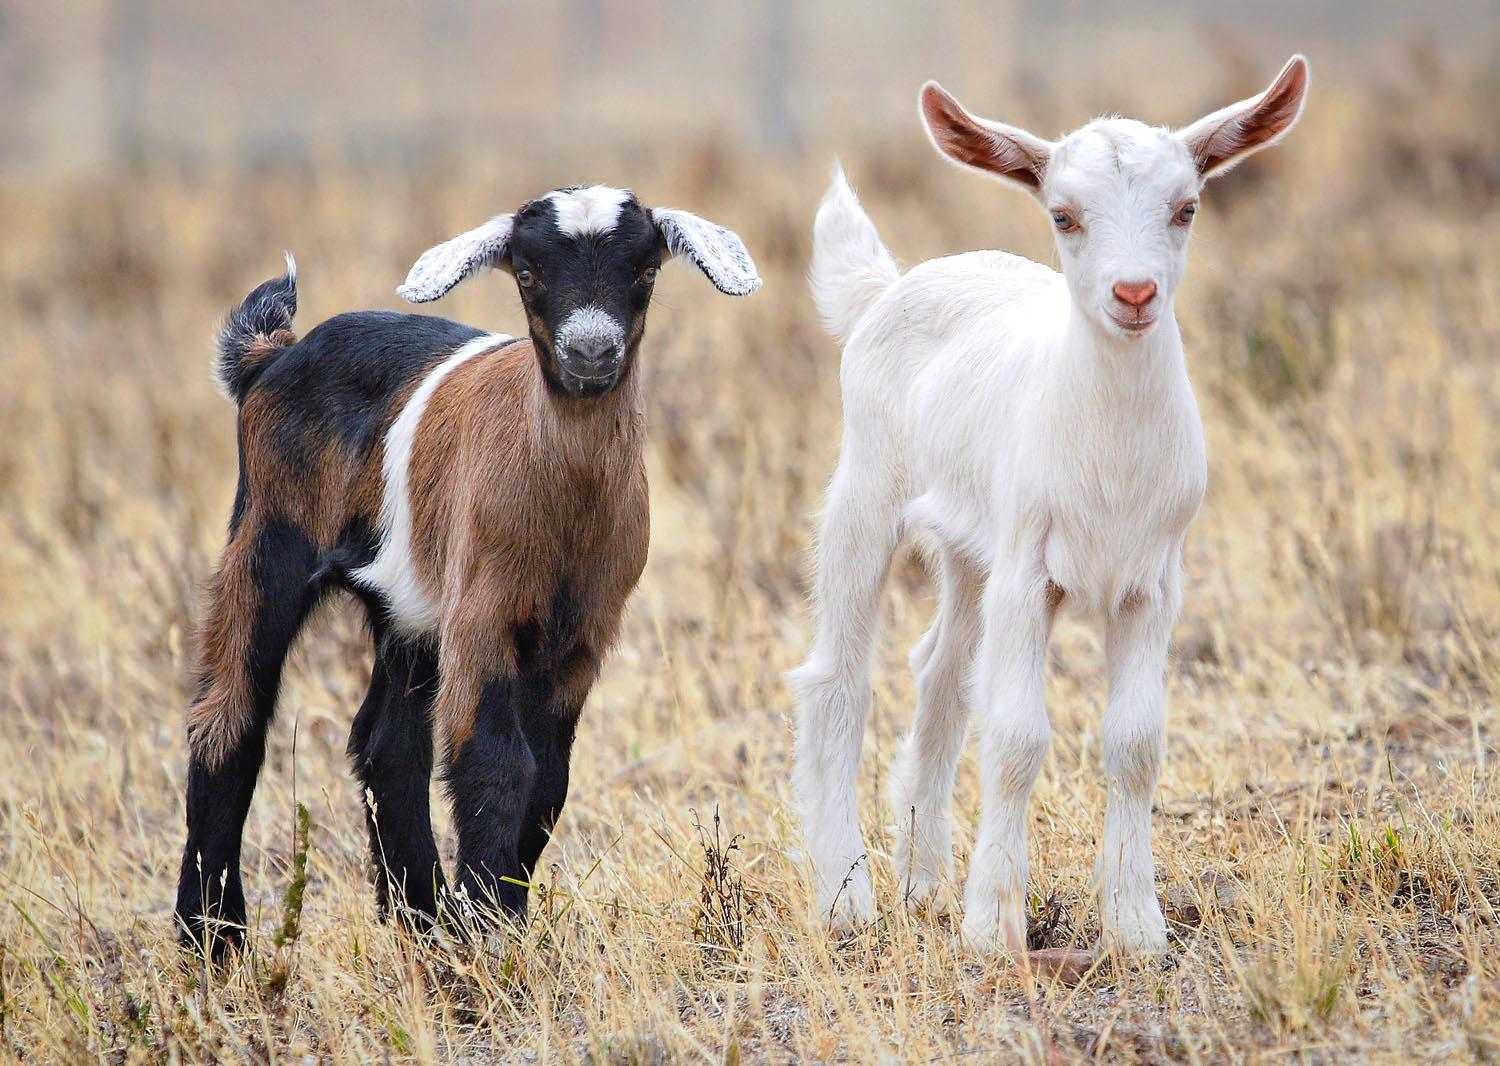 Lovely Wallpaper Of Baby Goats